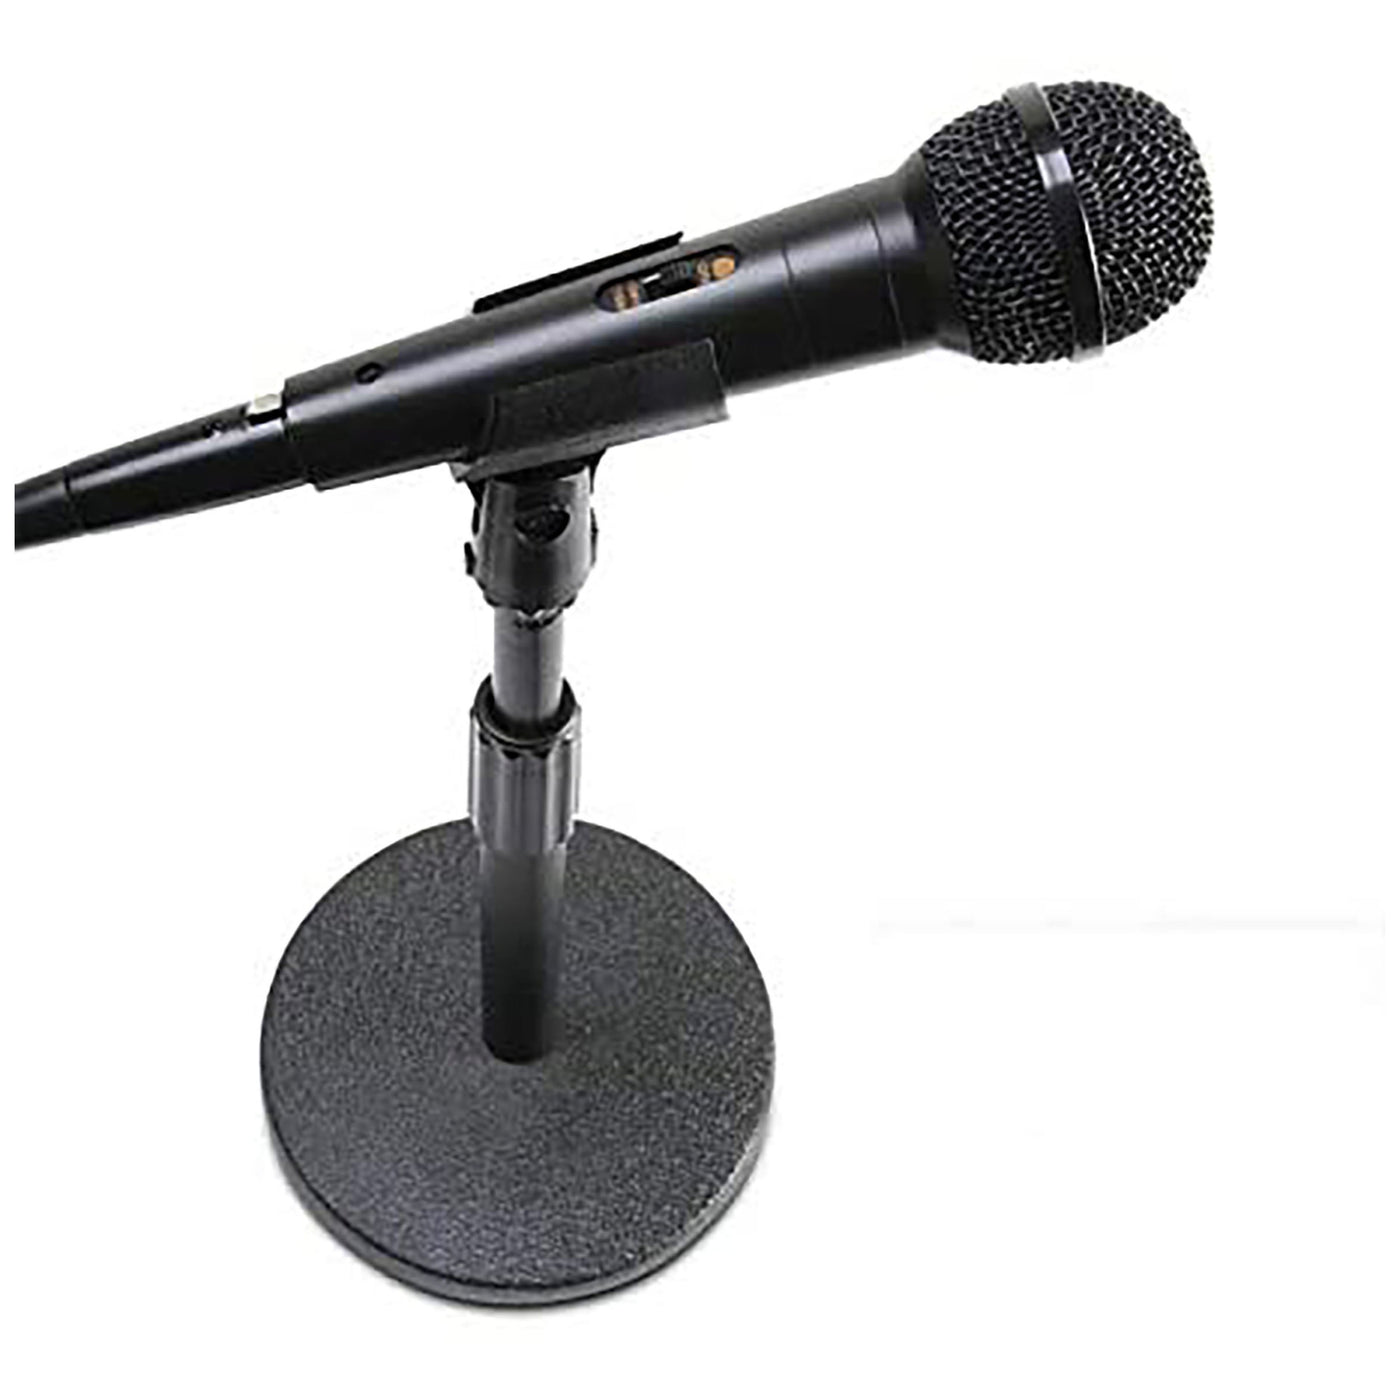 On-Stage Stands DS7200B Adjustable Desktop Microphone Stand, Black